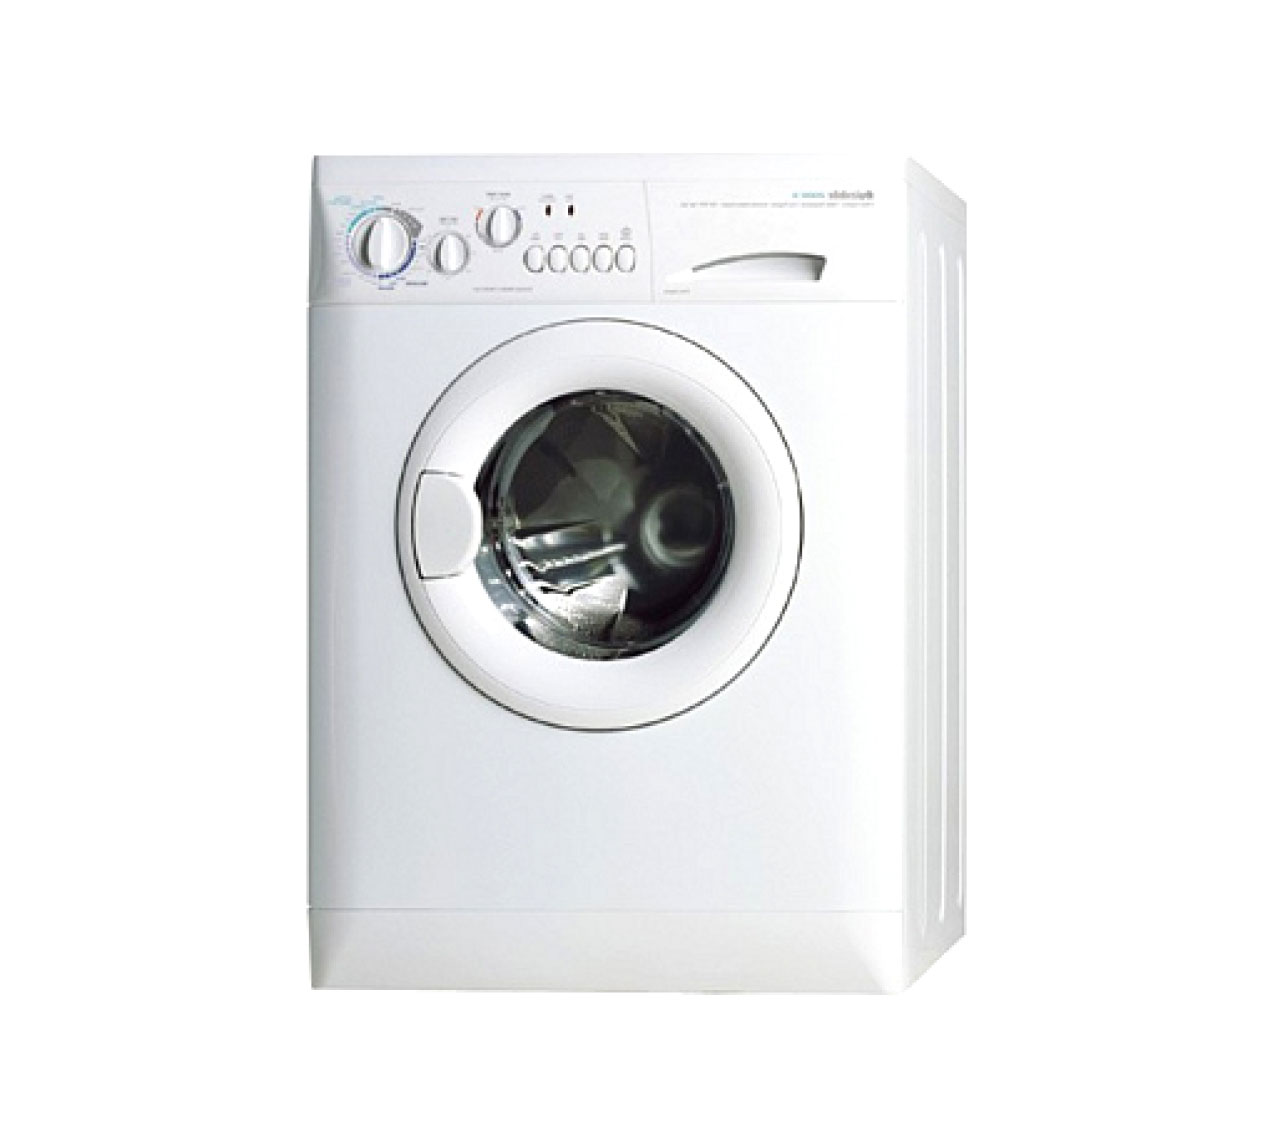 gibson washer dryer warranty